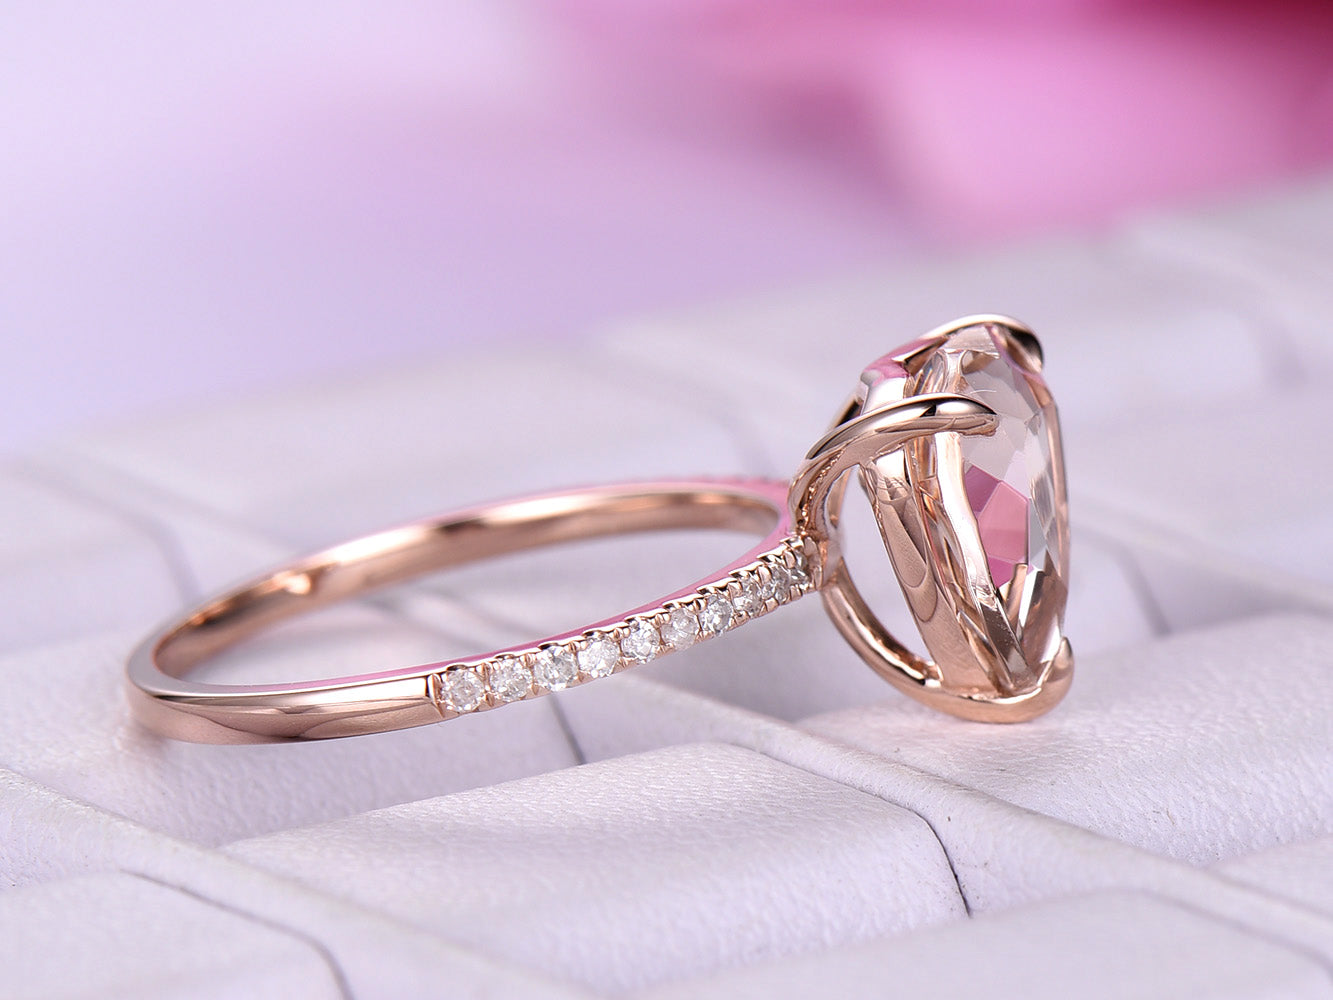 Reserved for Gina Heart Morganite Engagement Ring 14K Rose Gold 9mm